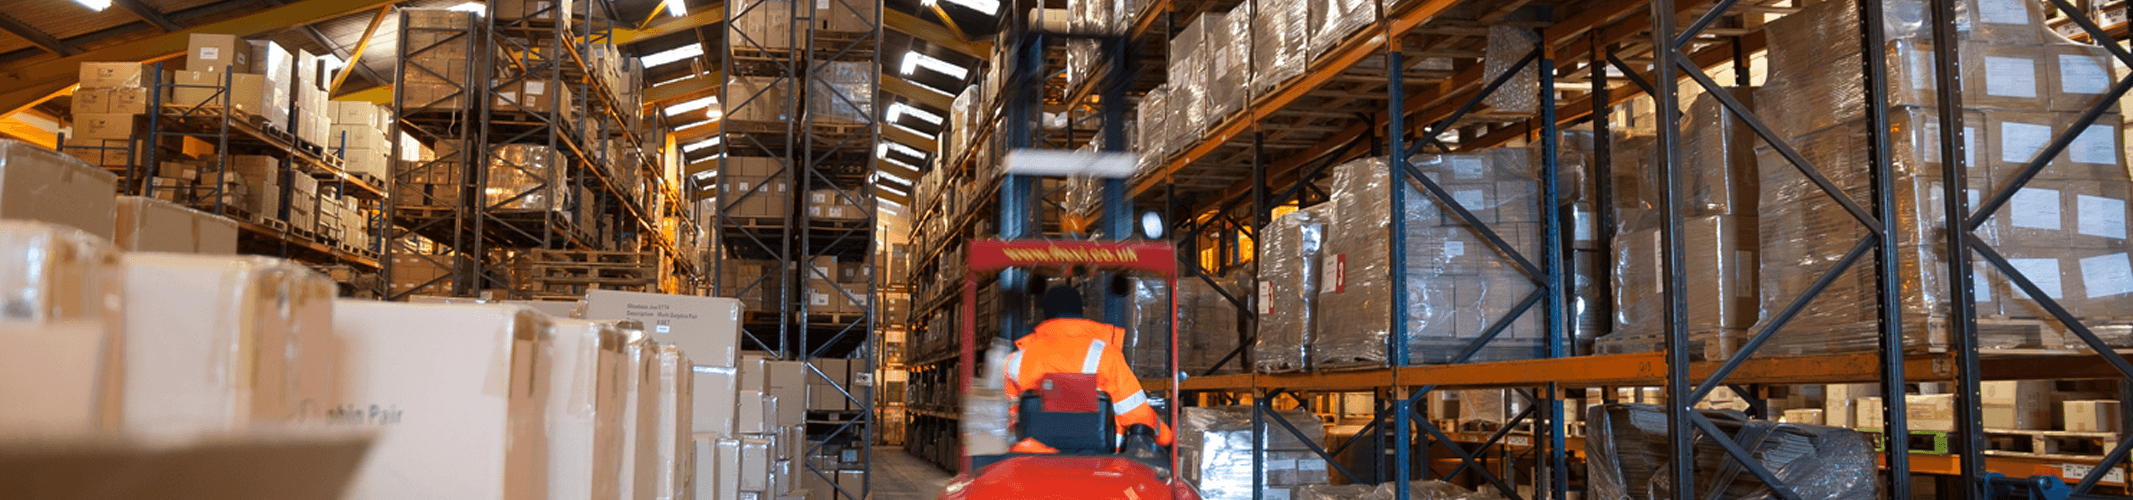 trade counter distribution warehouse aisle